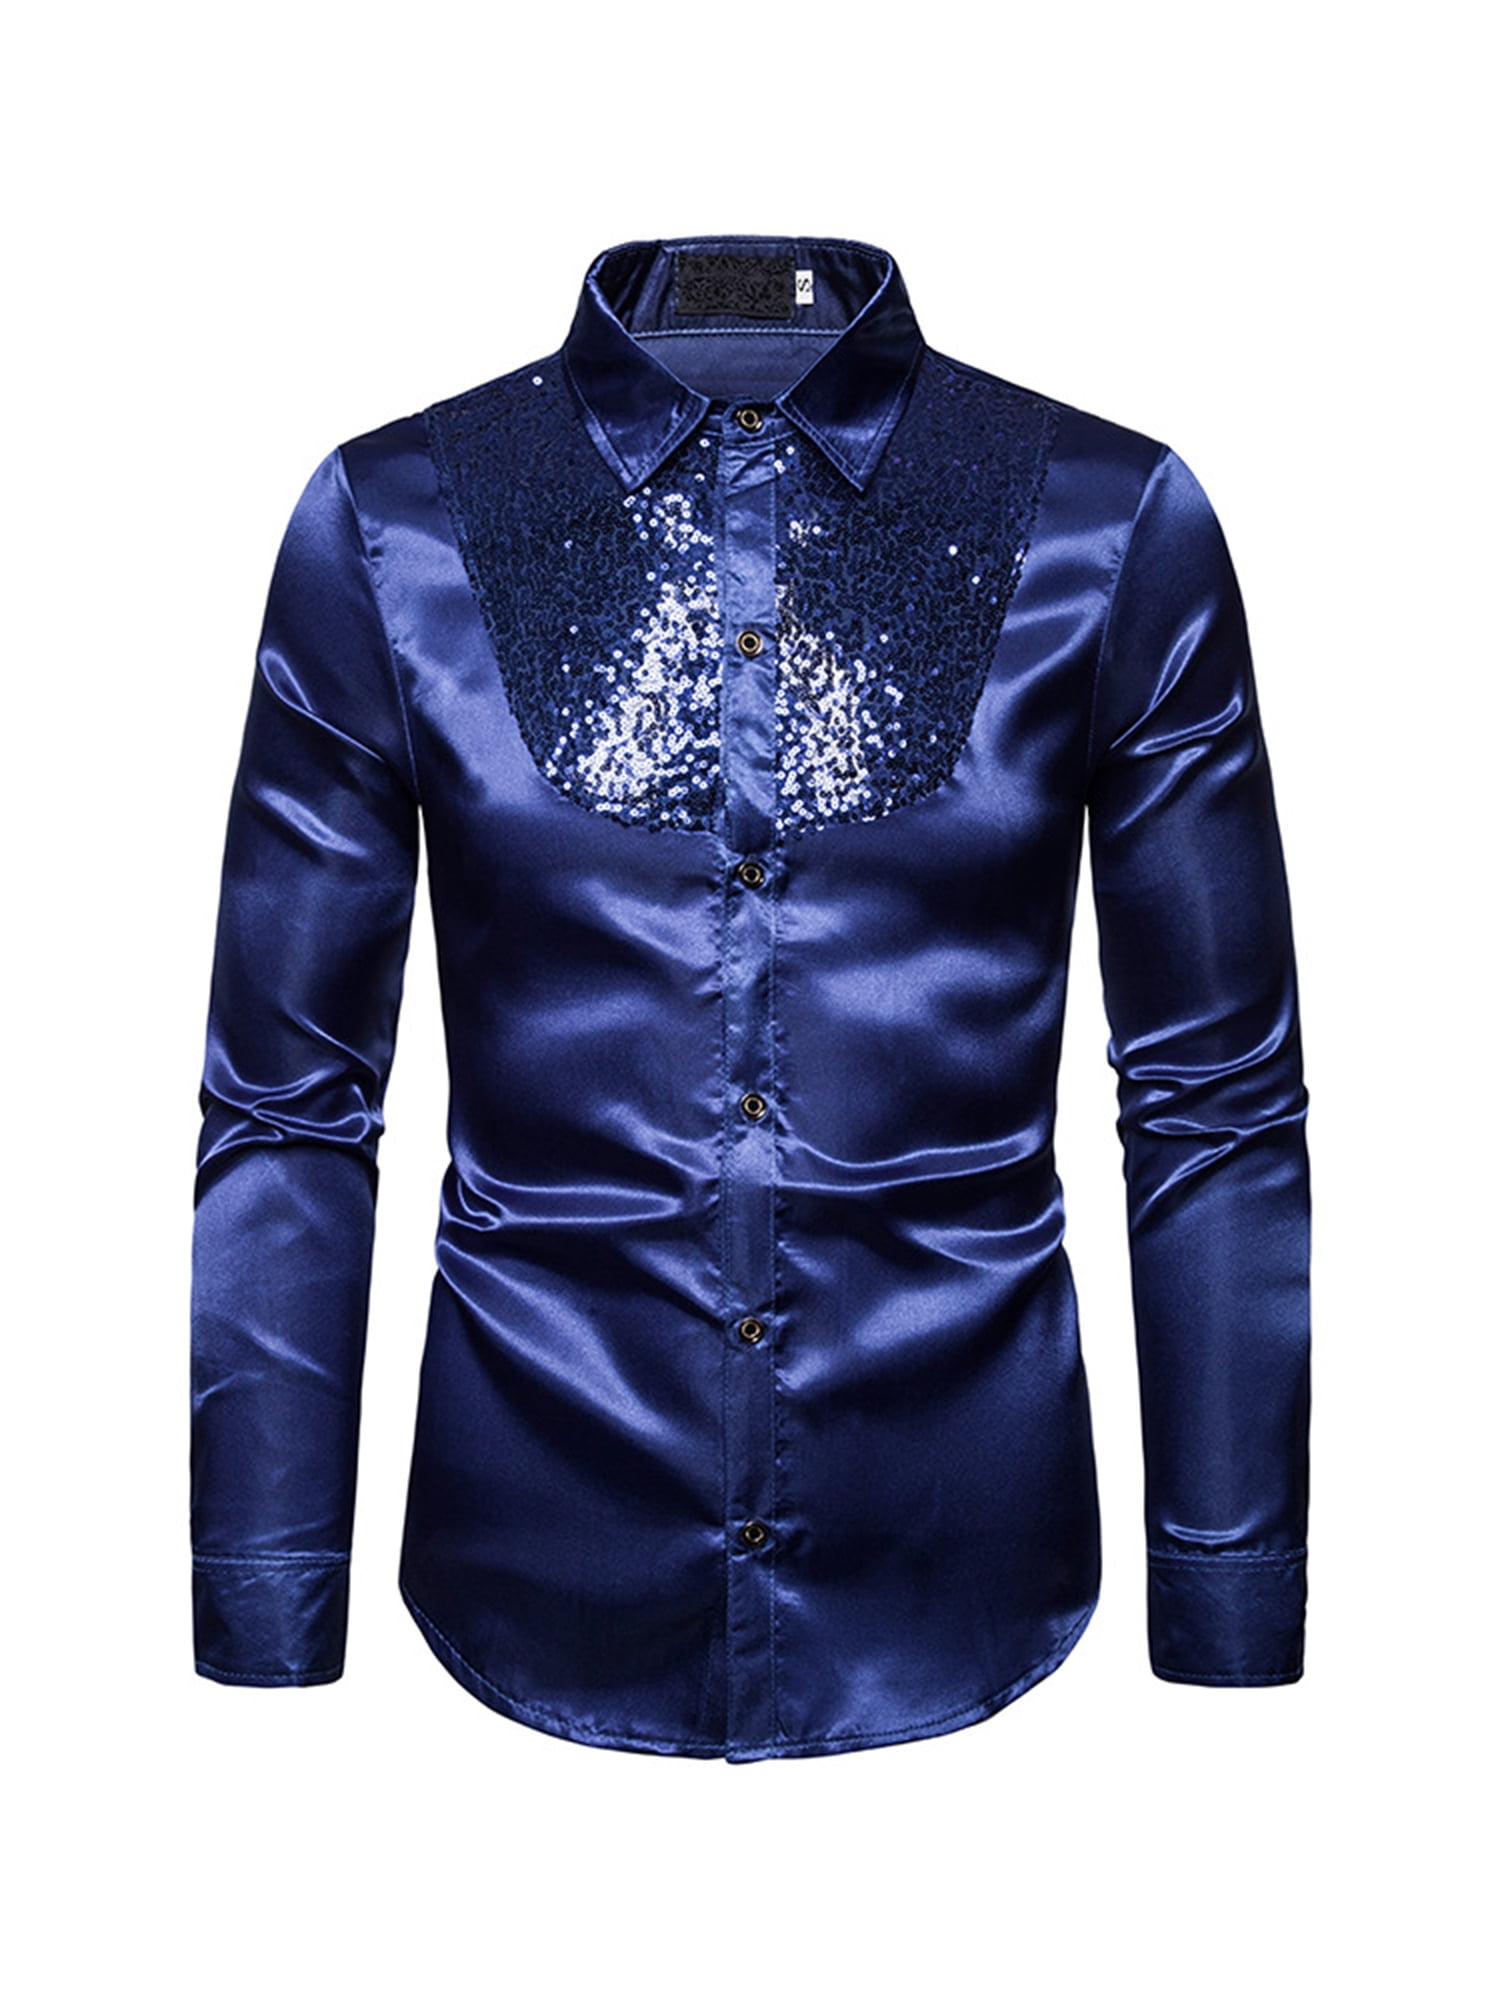 ZEROYAA Mens Disco Shiny Sequin Design Silk Like Satin Dress Shirts for Party 